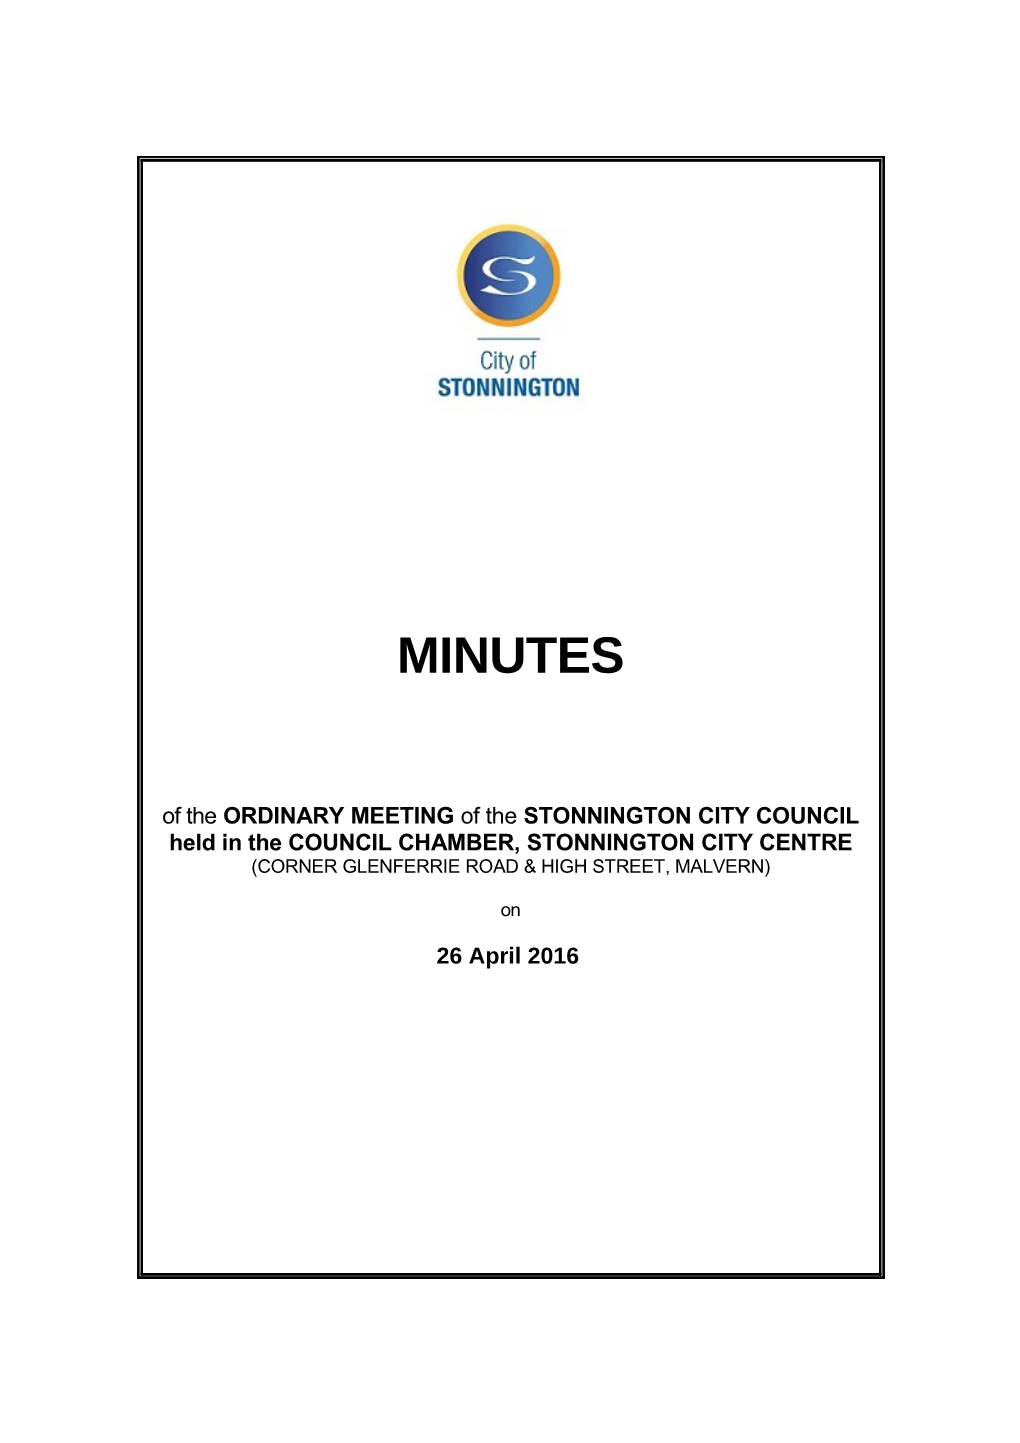 Minutes of Council Meeting - 26 April 2016